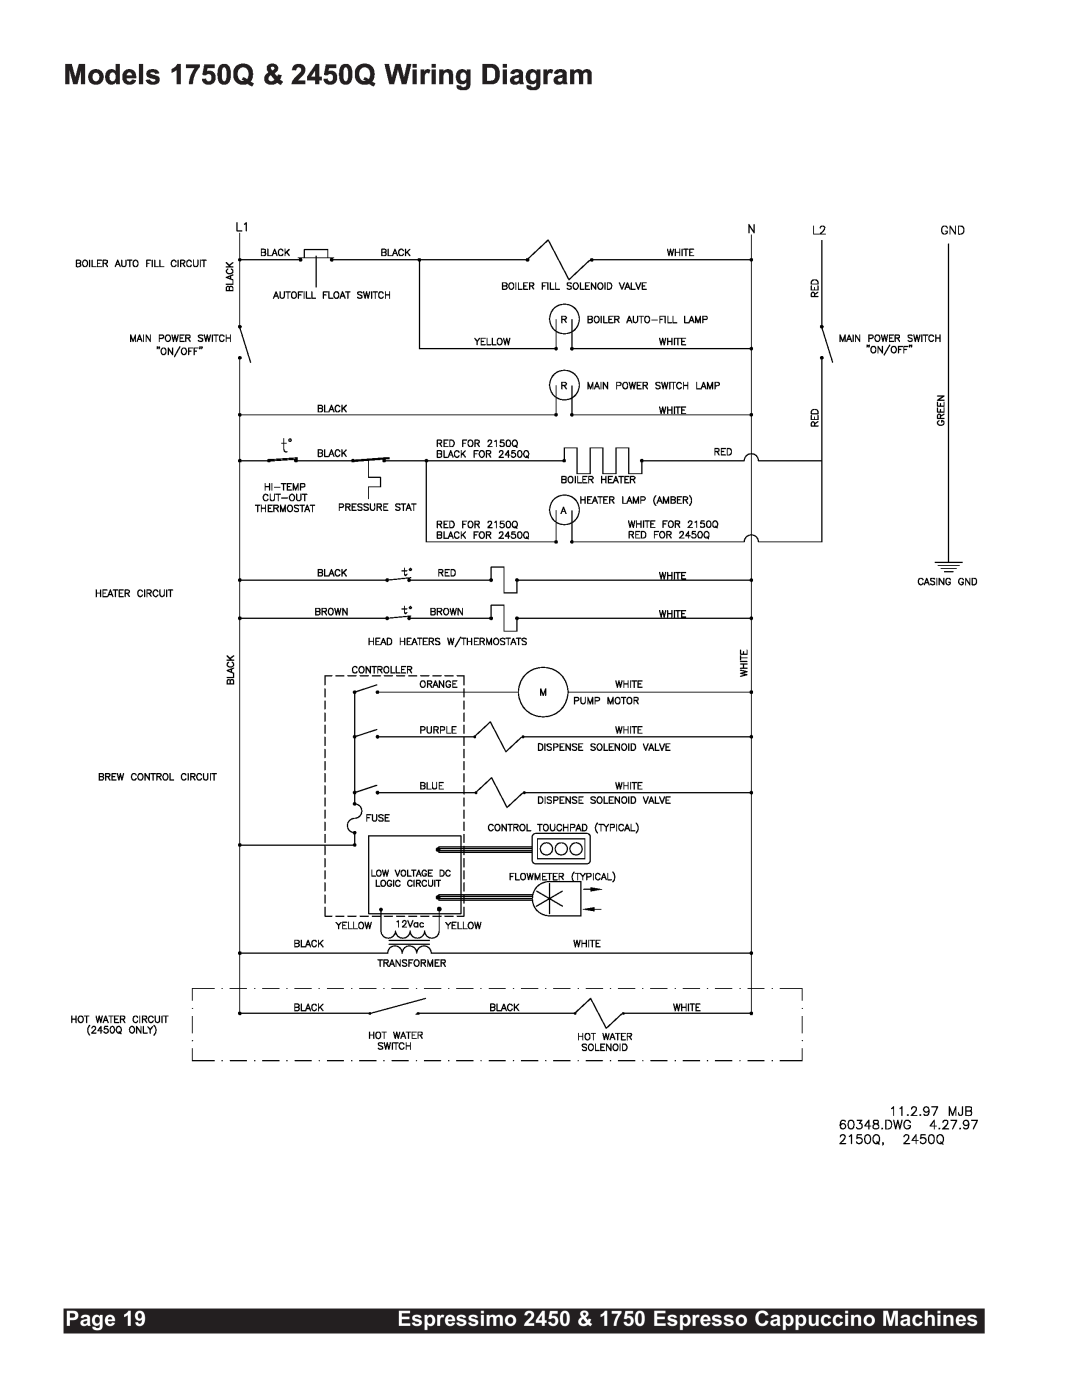 Grindmaster installation manual Models 1750Q & 2450Q Wiring Diagram, Page 